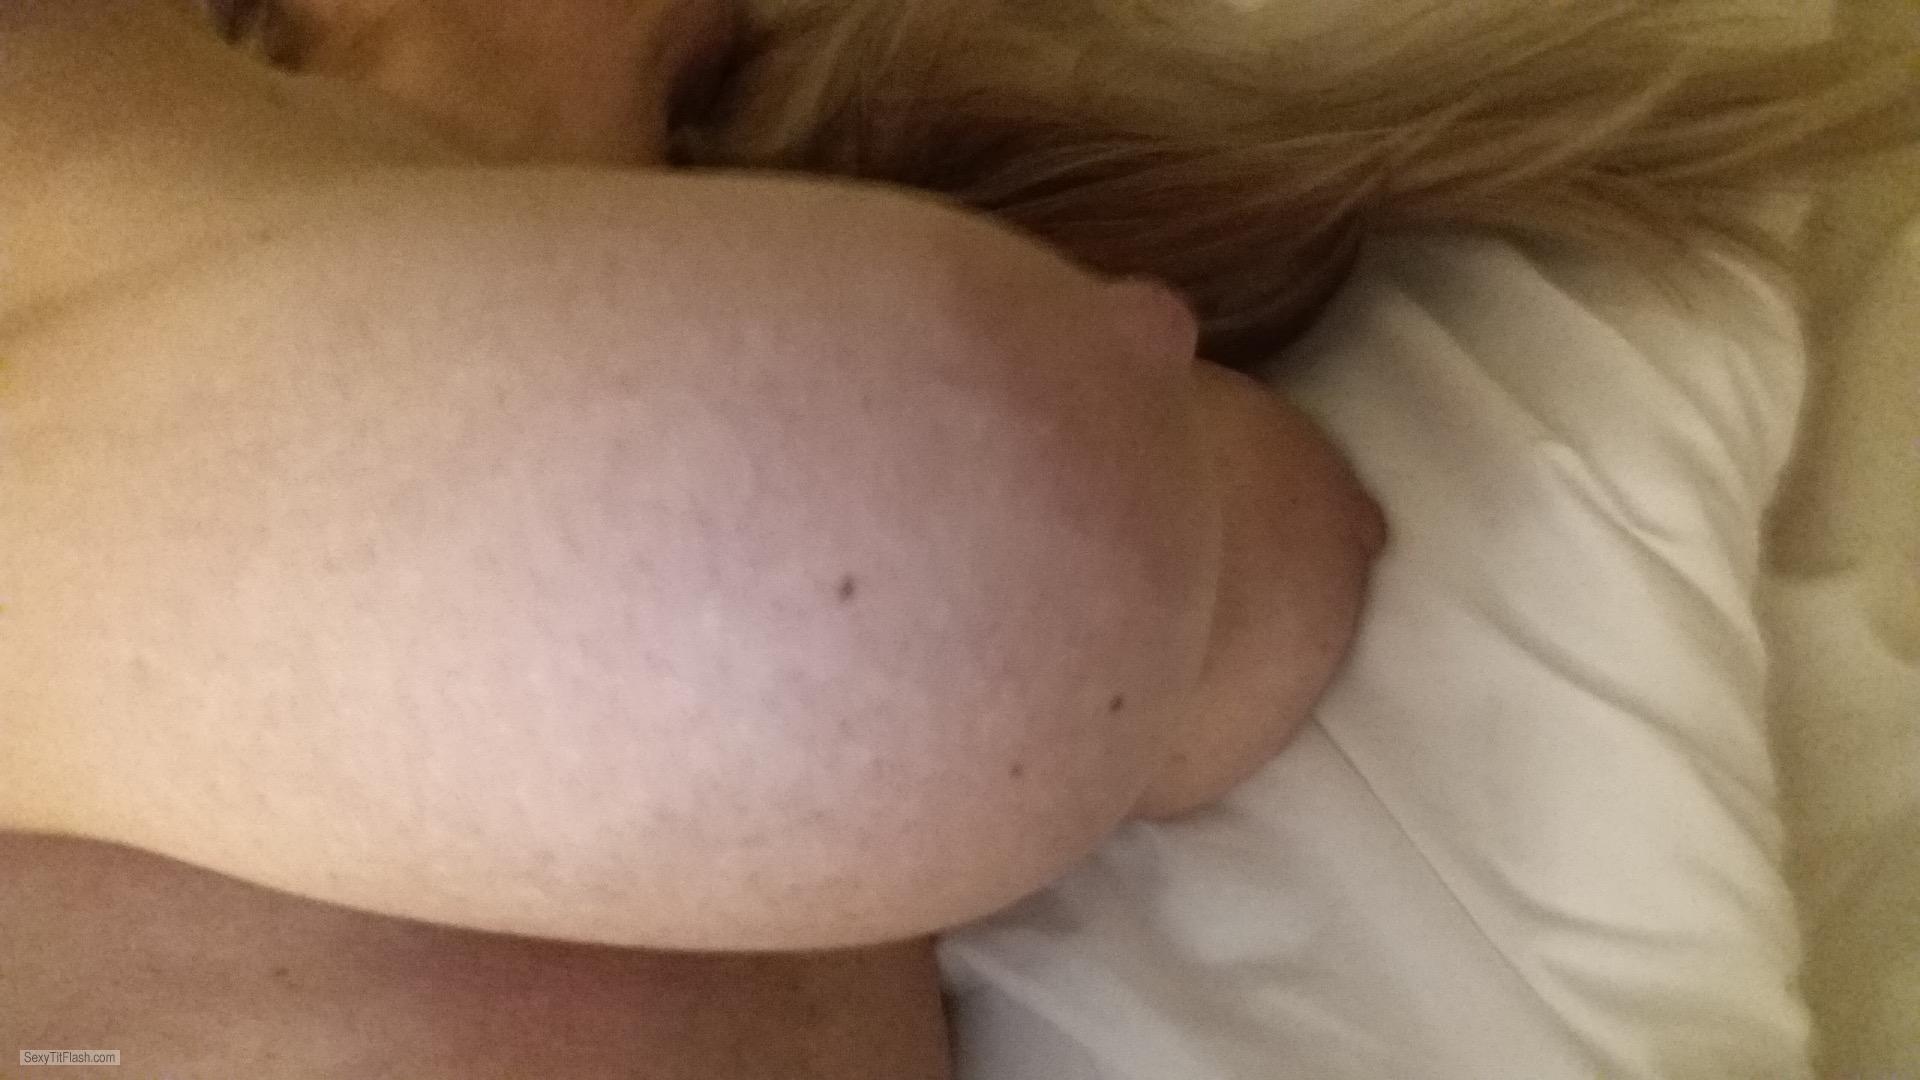 Tit Flash: My Very Small Tits - Topless Corpus81 from United Kingdom